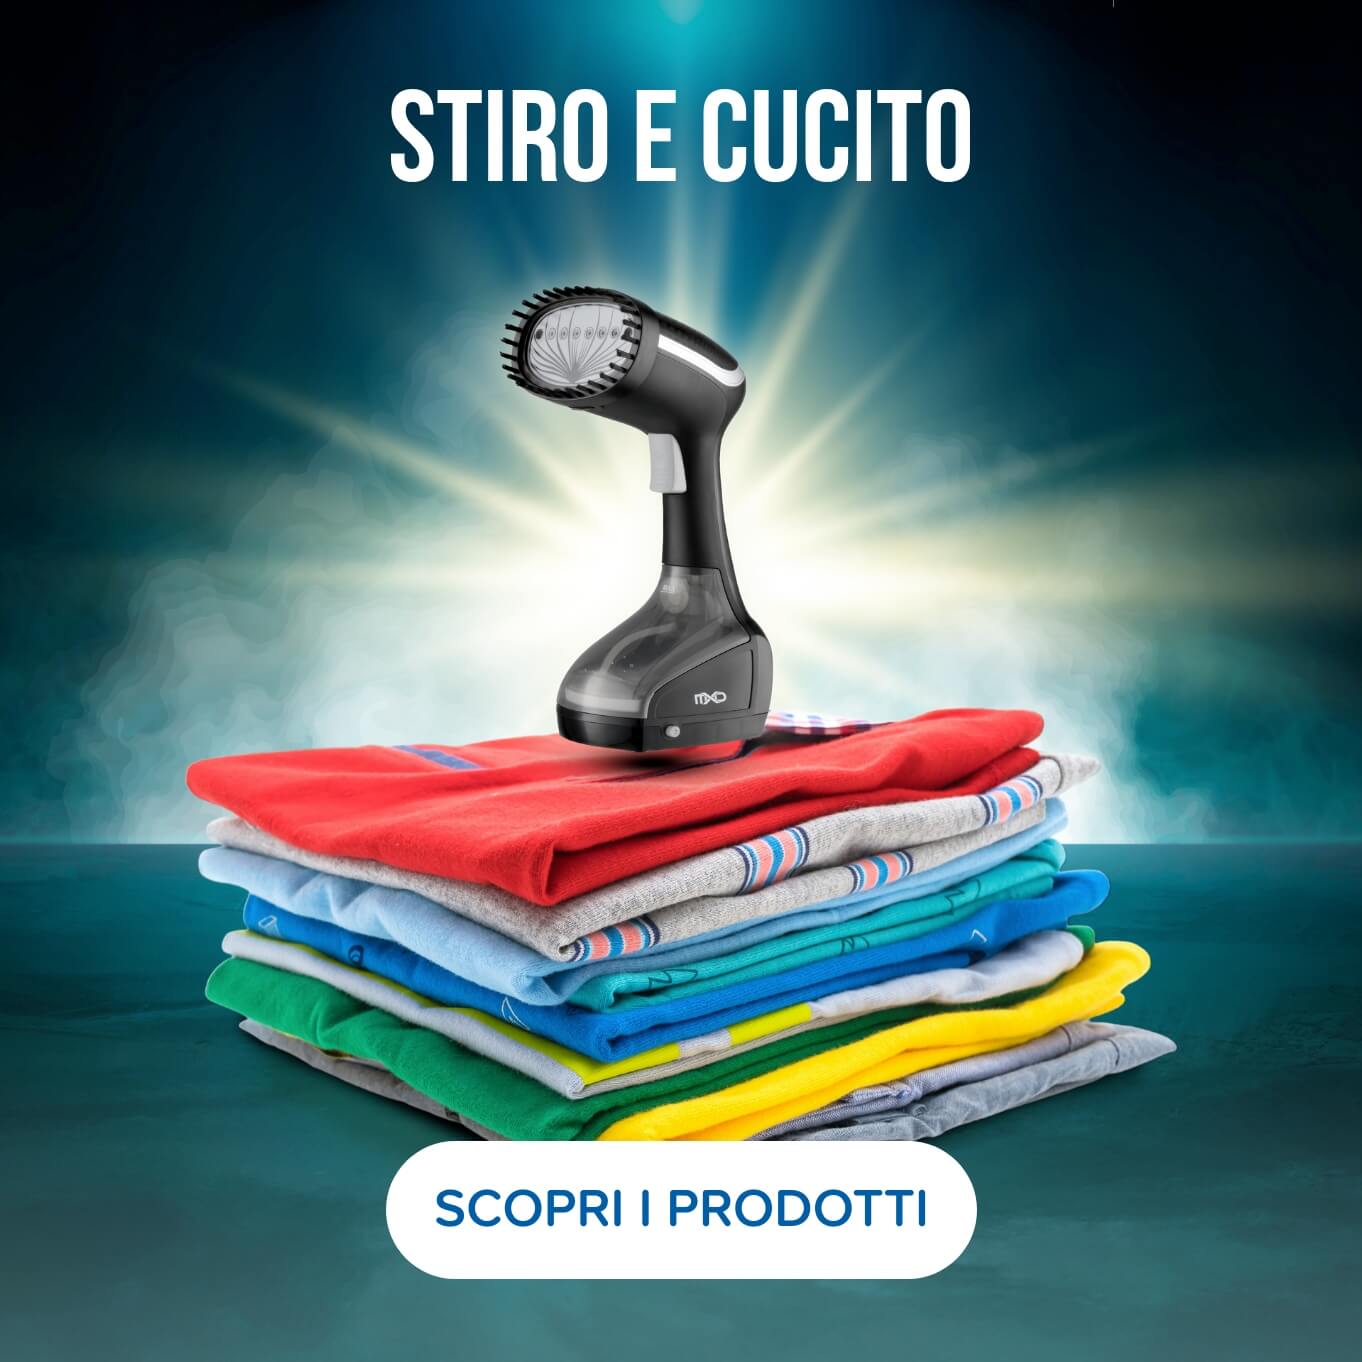 STIRO CUCITO - shop online